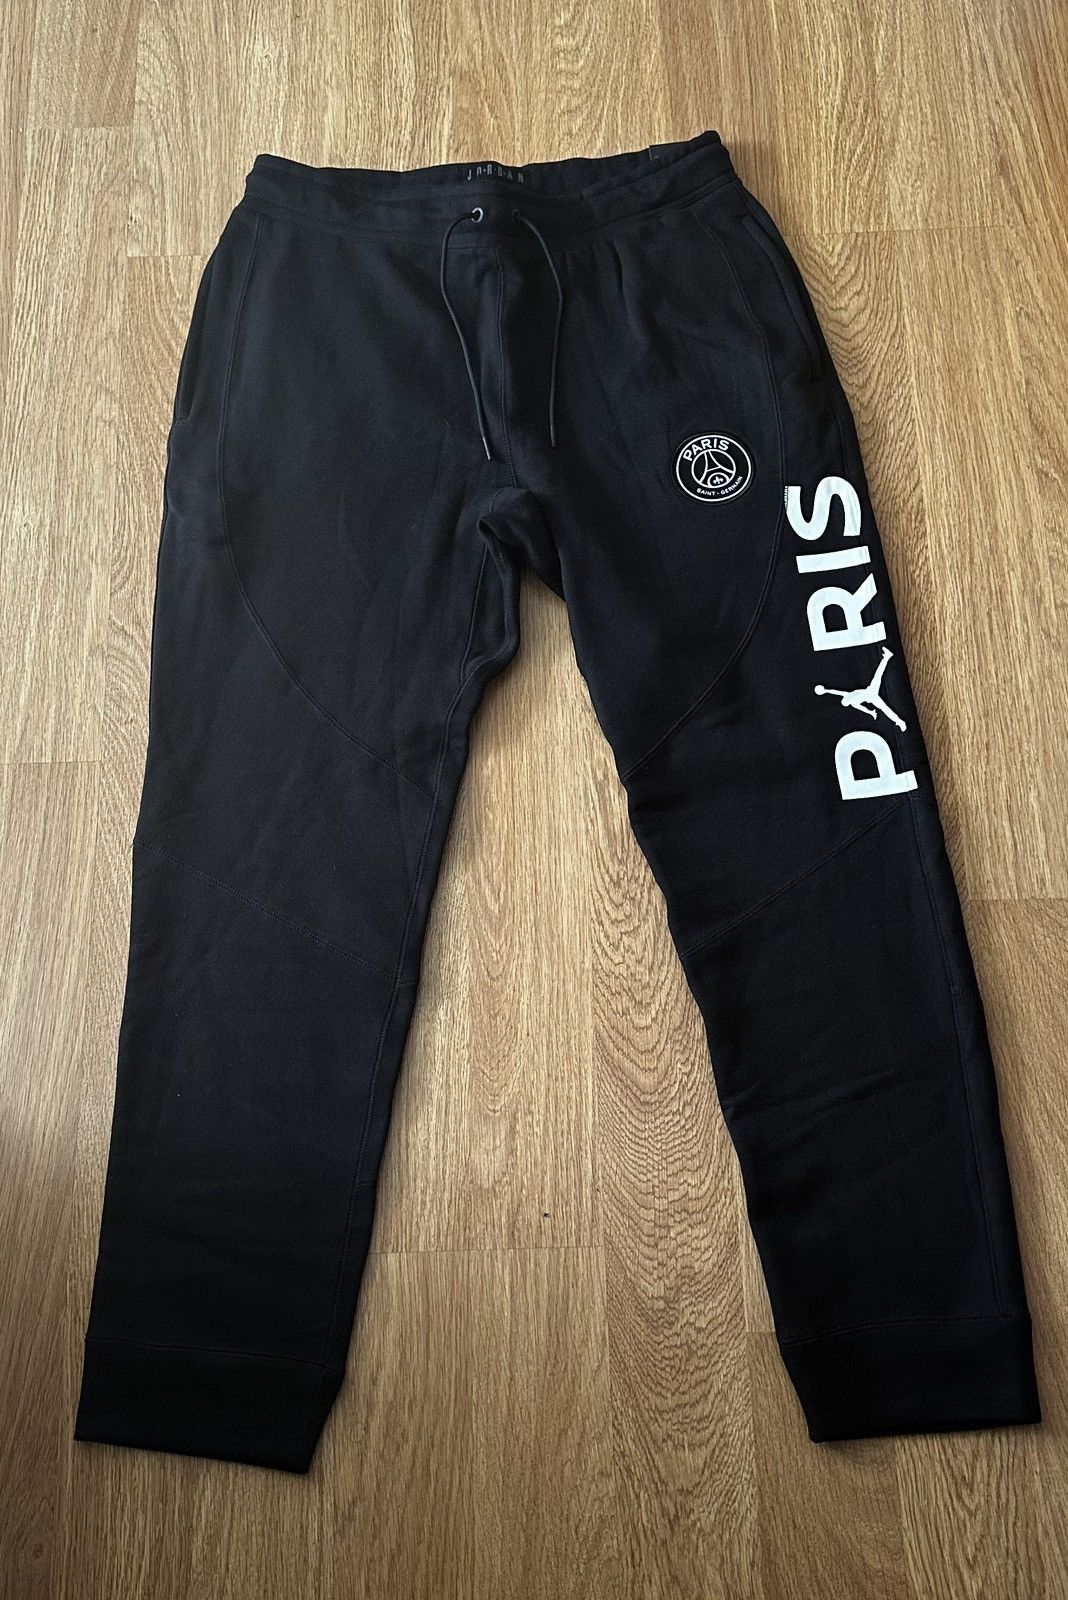 Jordan Brand Jordan x Paris Saint Germain (PSG) Sweatpants Black Size XL |  Grailed